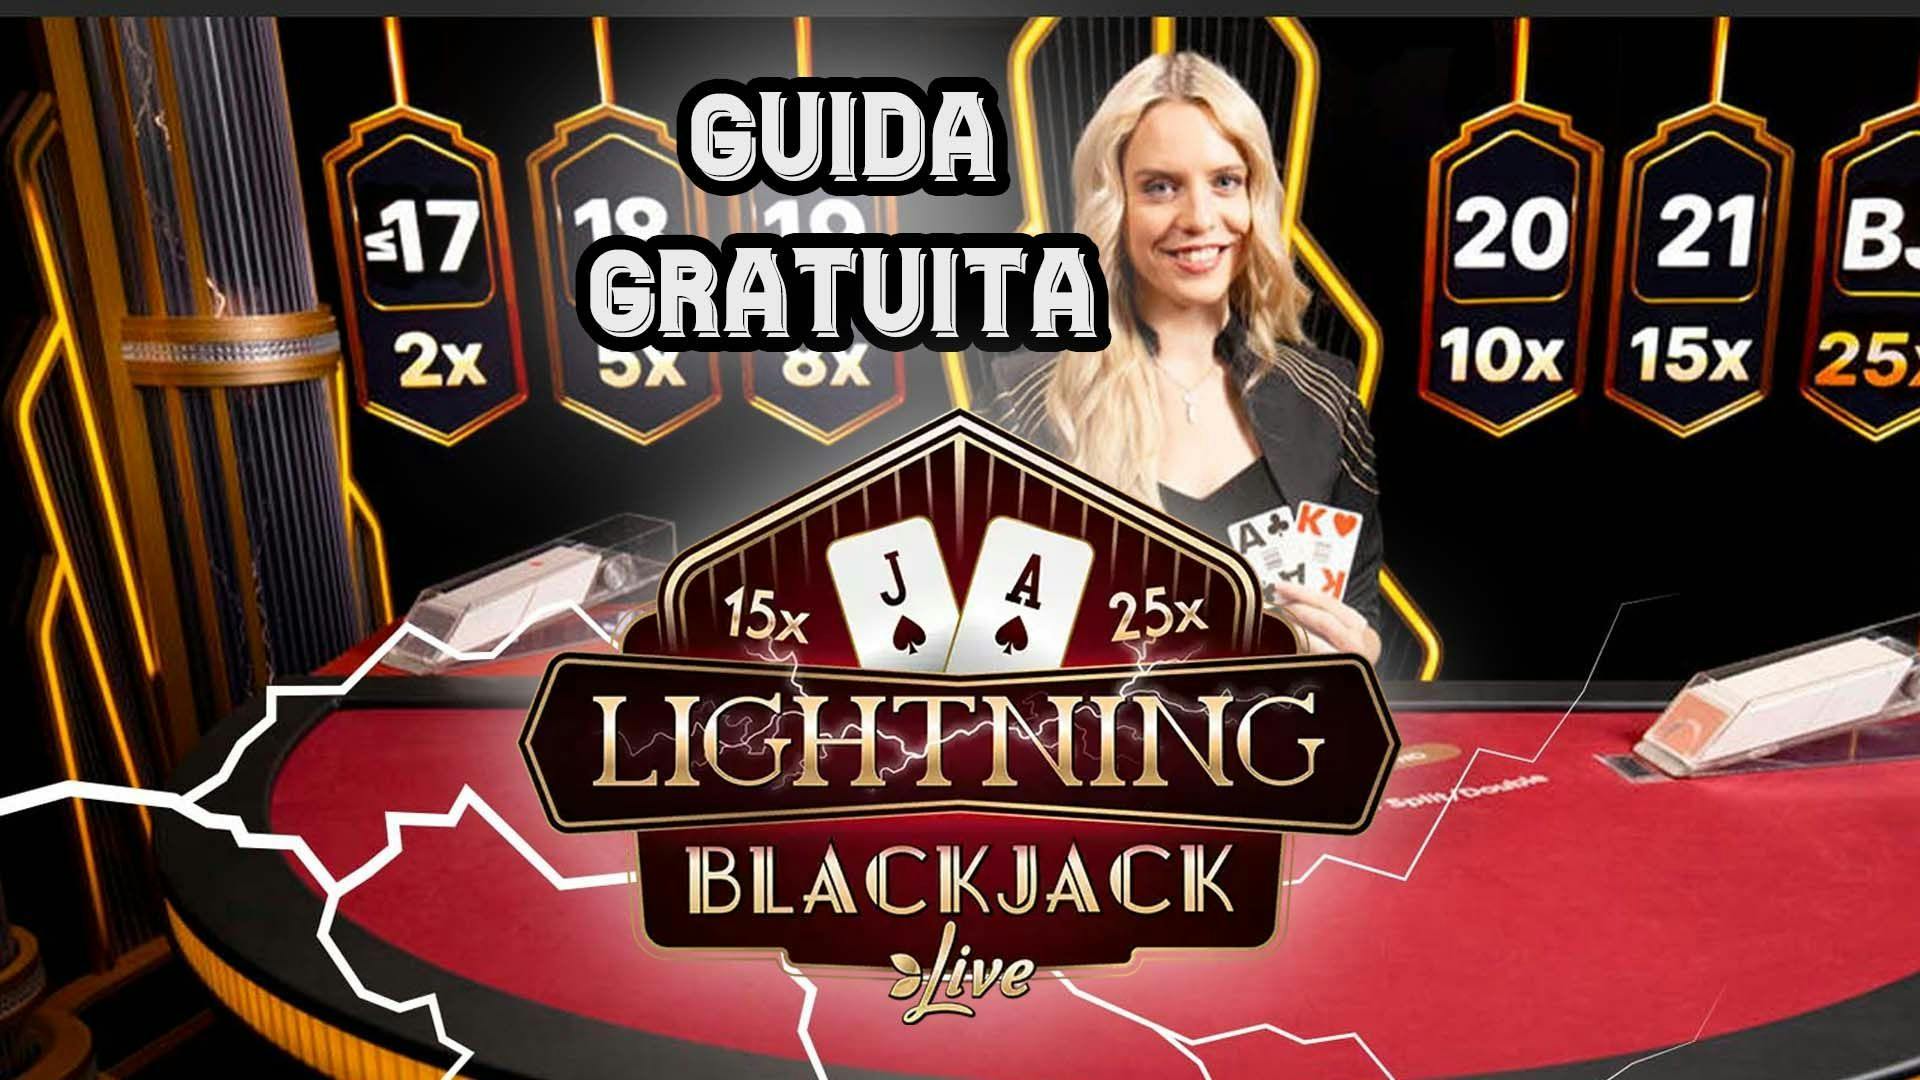 Lightning Blackjack Evolution Gaming Guida Gratis